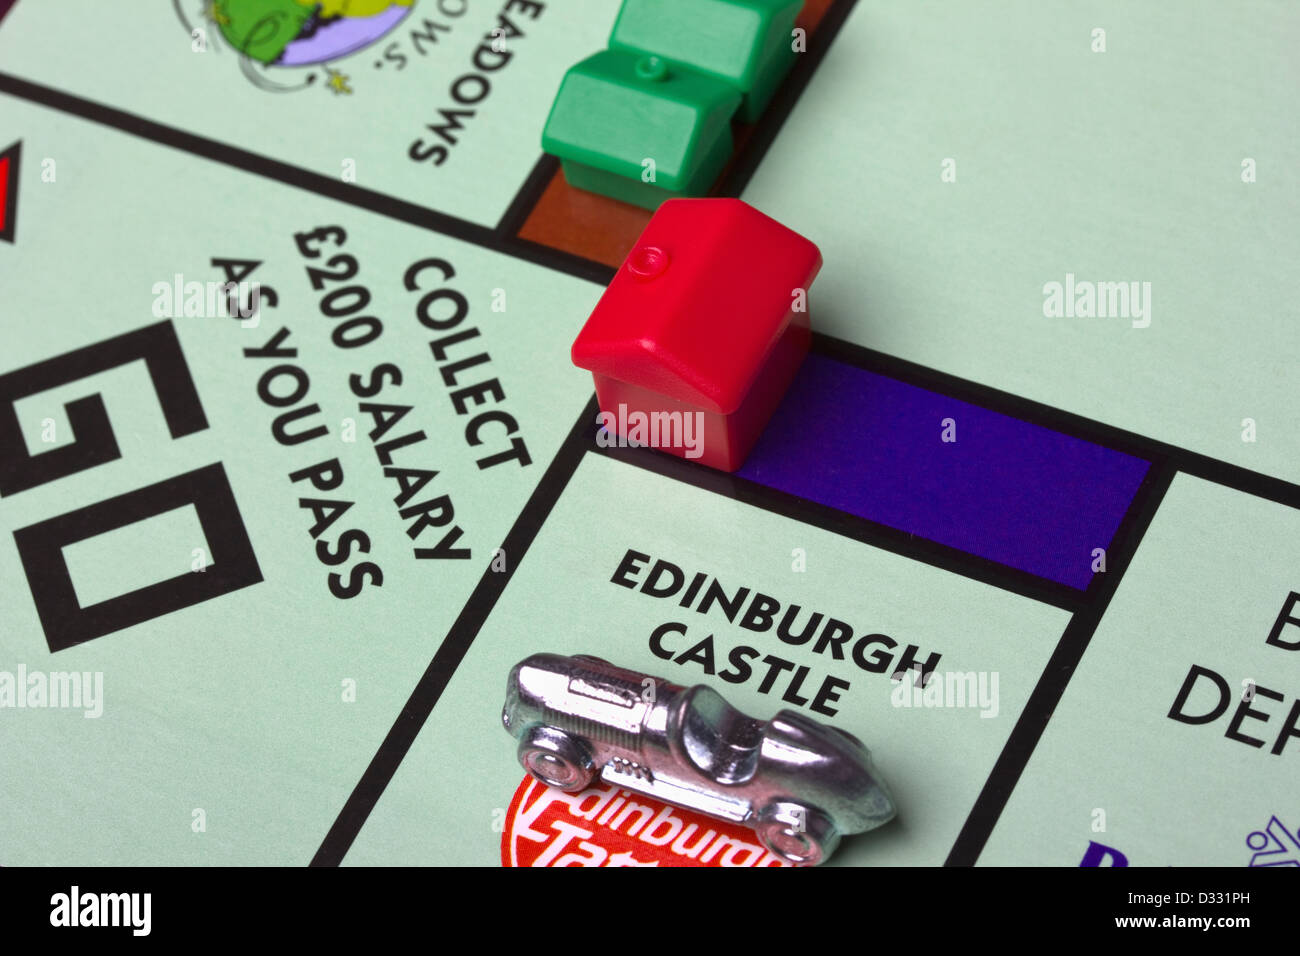 Monopoly game, Edinburgh Edition Stock Photo - Alamy